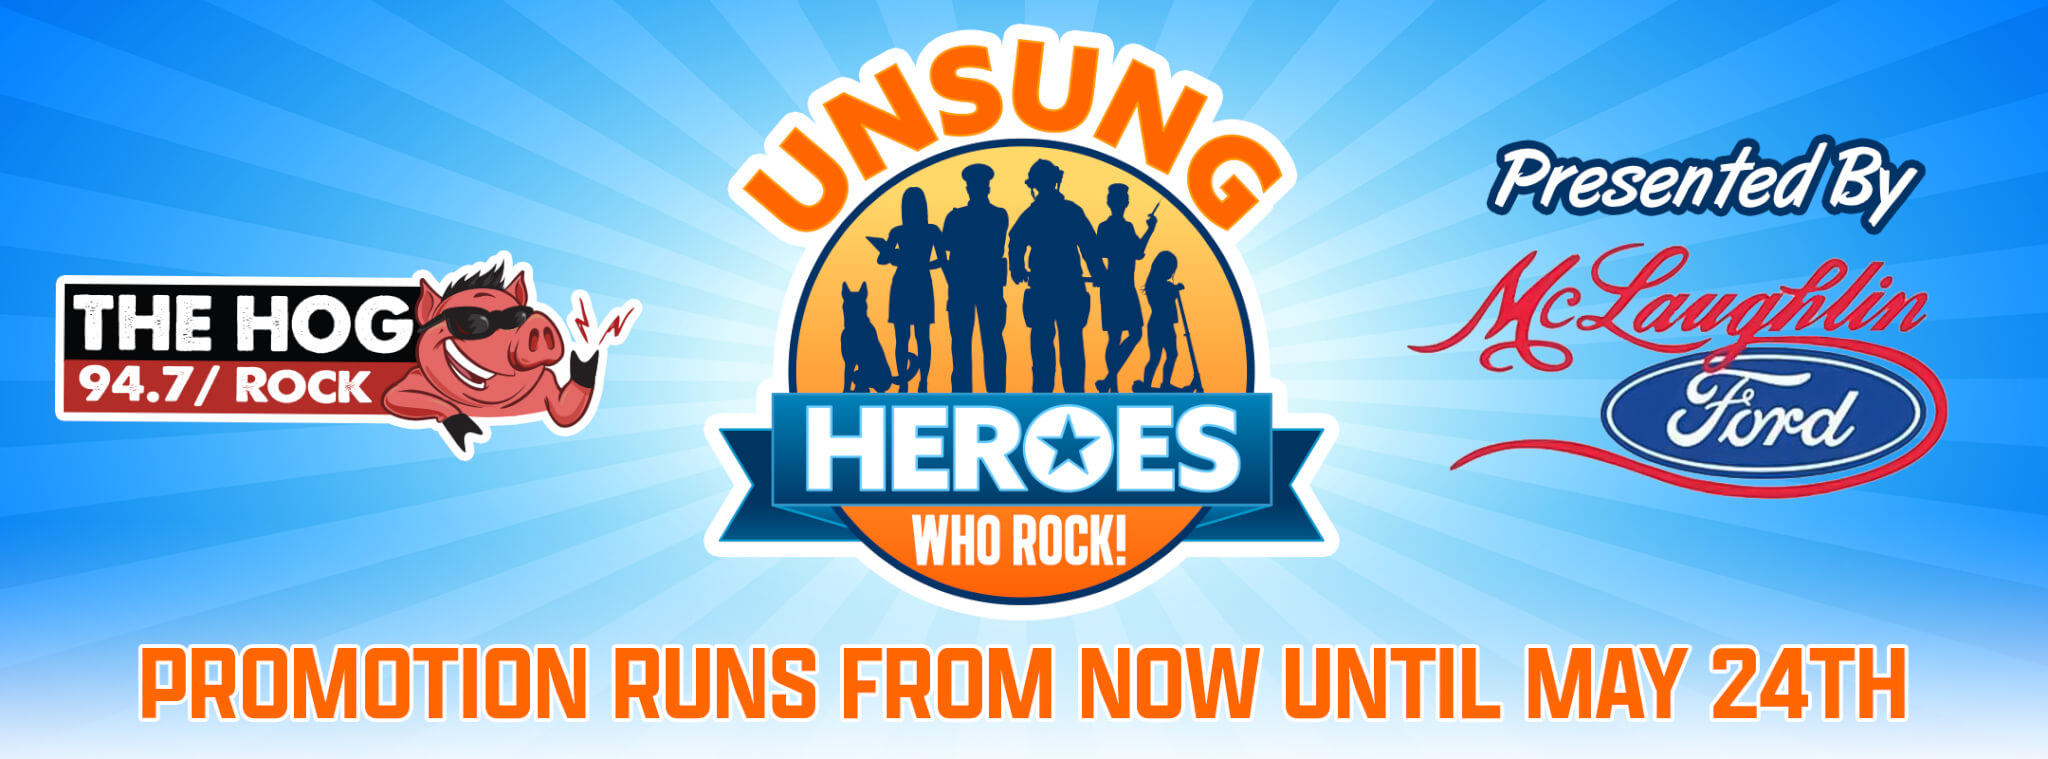 Unsung-Heroes_Slider